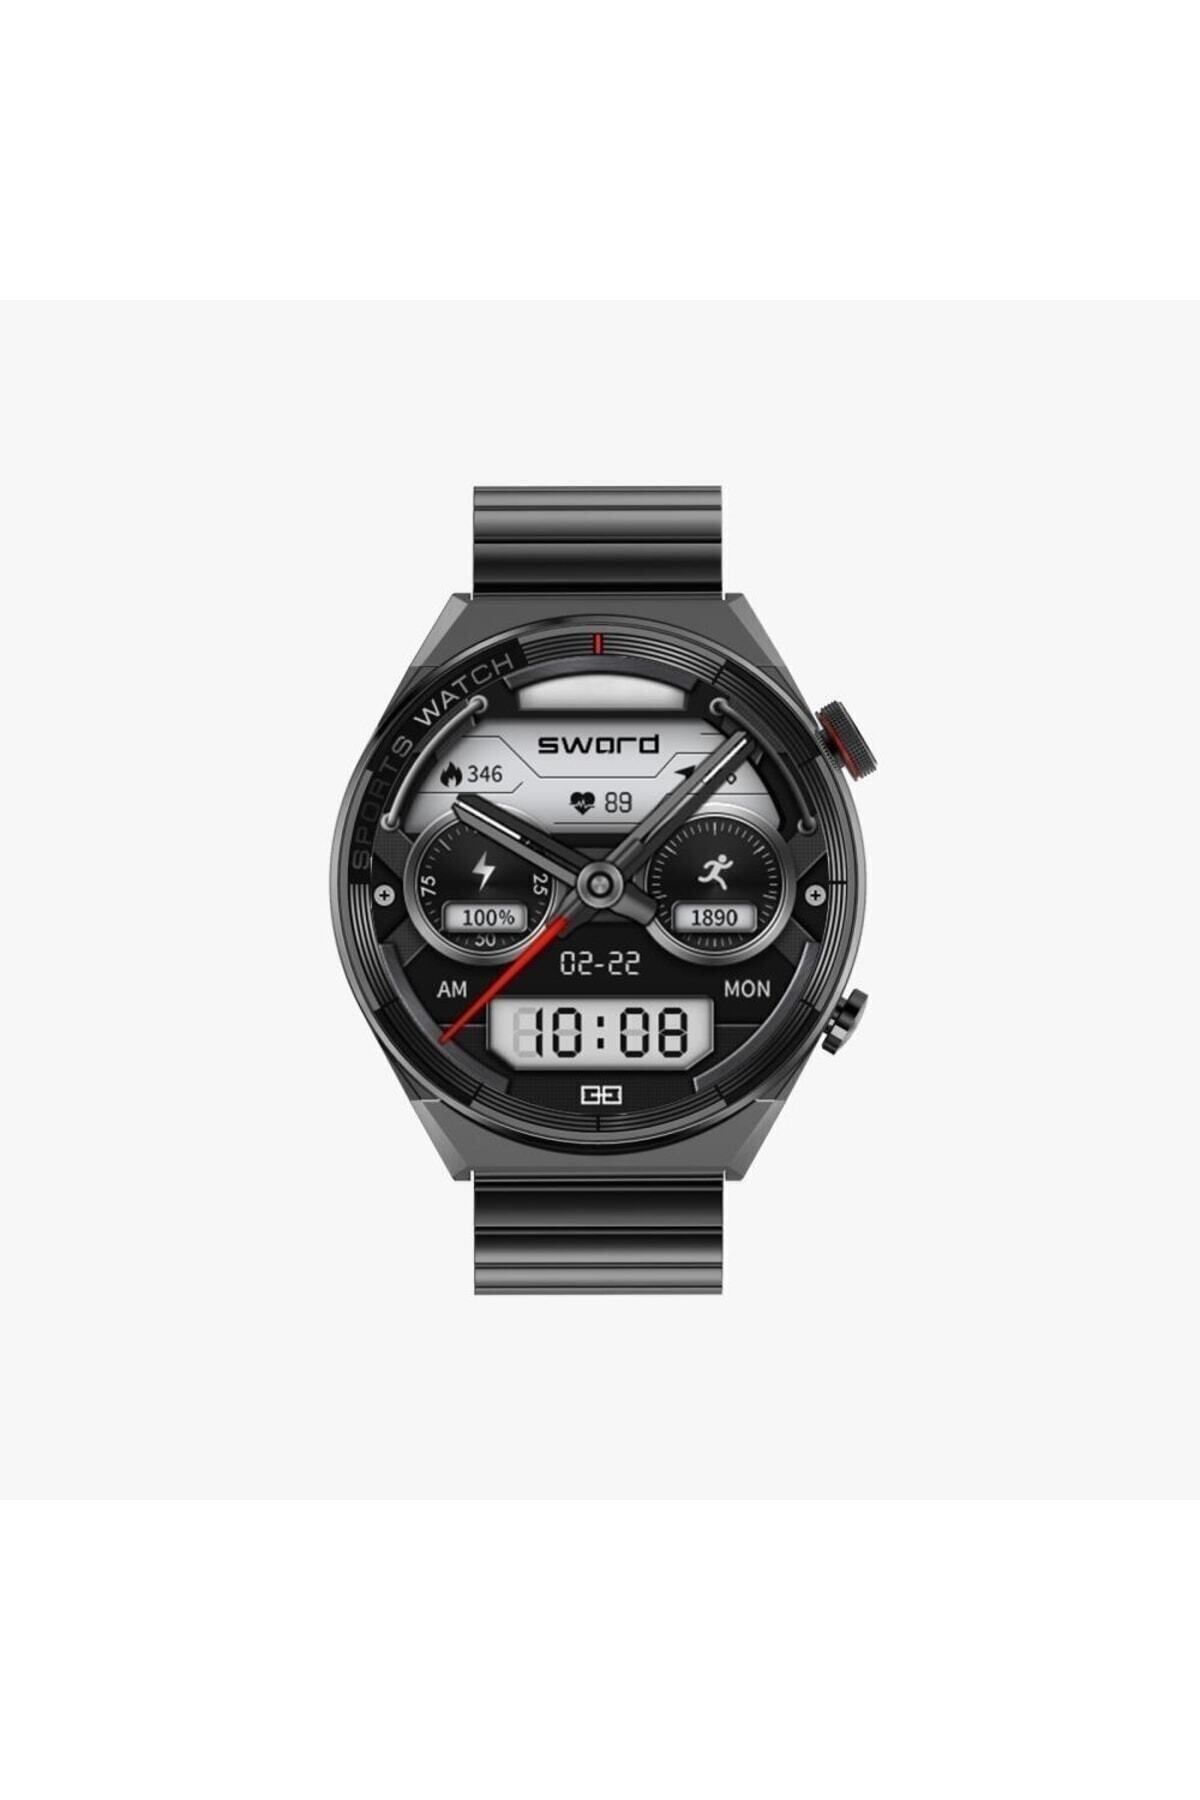 Genel Markalar Çok Renkli Sw-wıa103 Watch 3 Siyah Akıllı Saat Çok Renkli Resmi Distribütör Garantili Yok Android Y